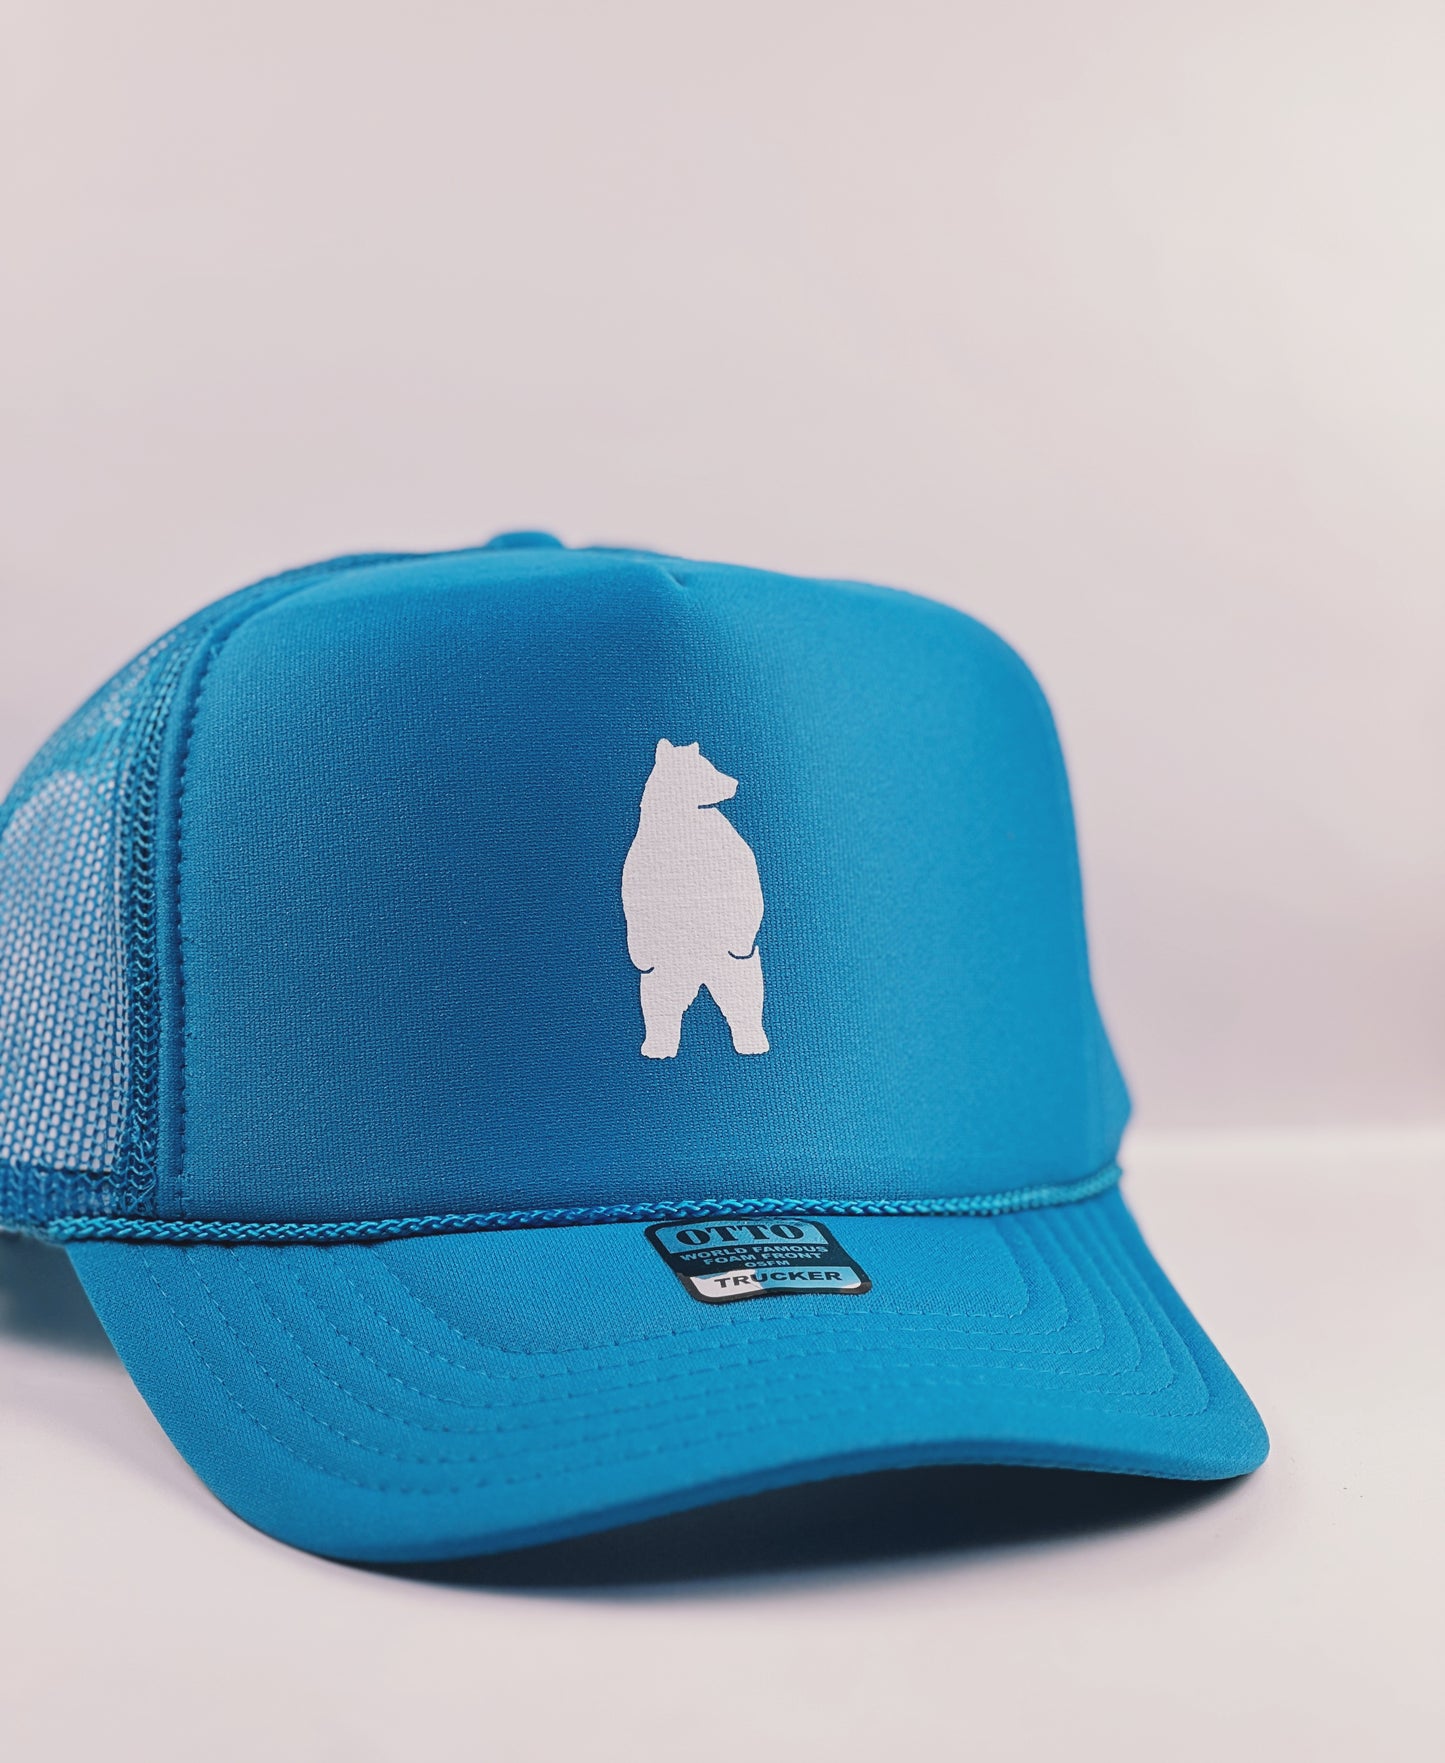 Hey Bear! Adult Trucker Hat- Turquoise